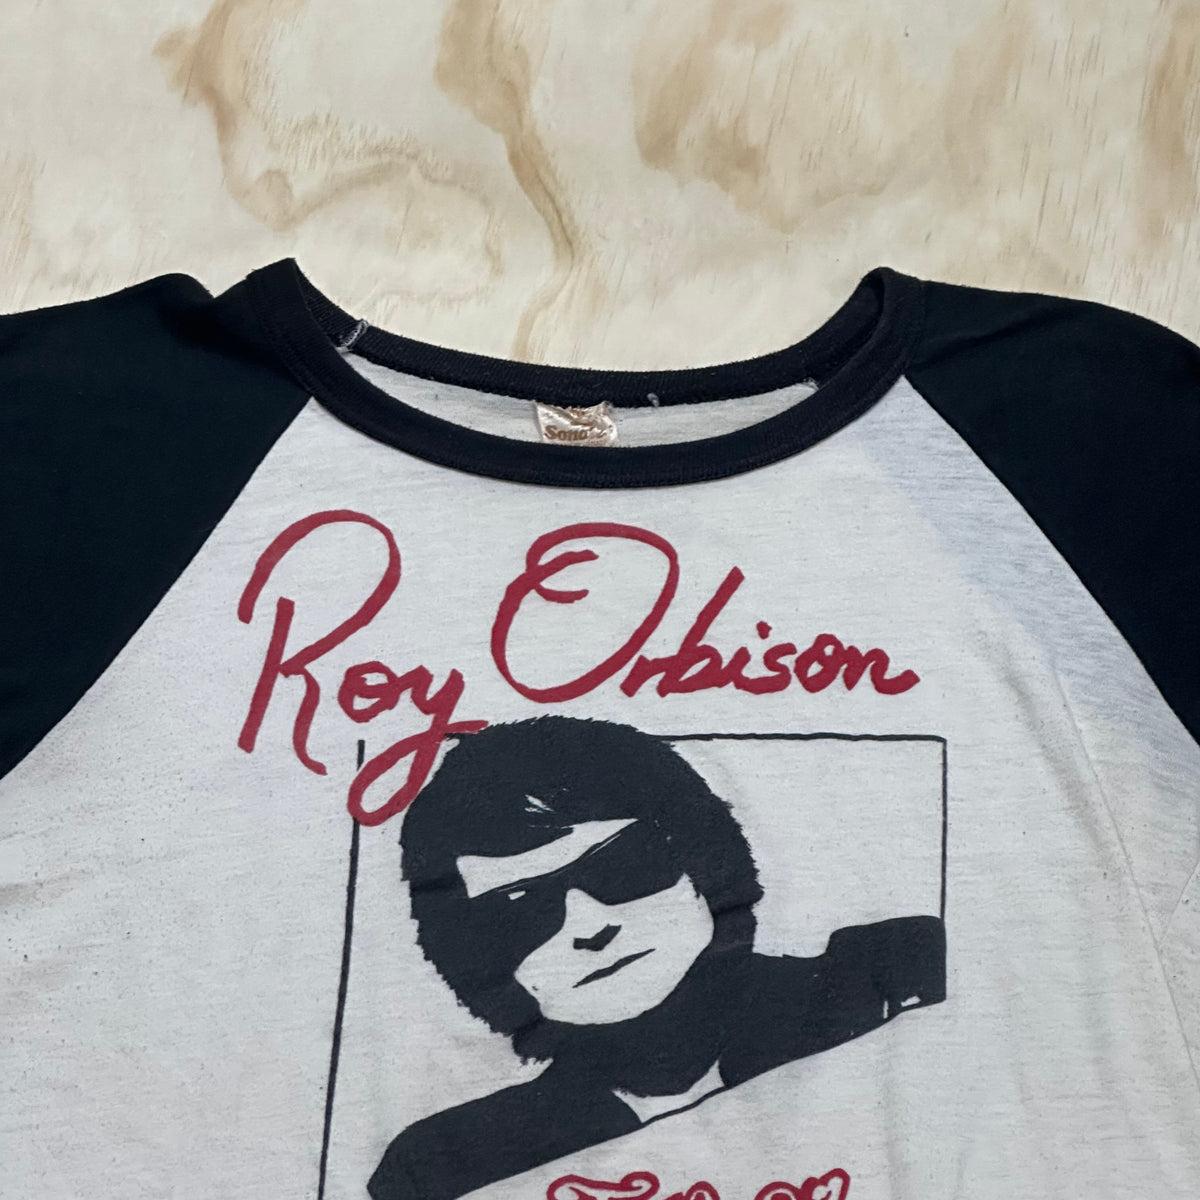 1987 Vintage Roy Orbison tour shirt